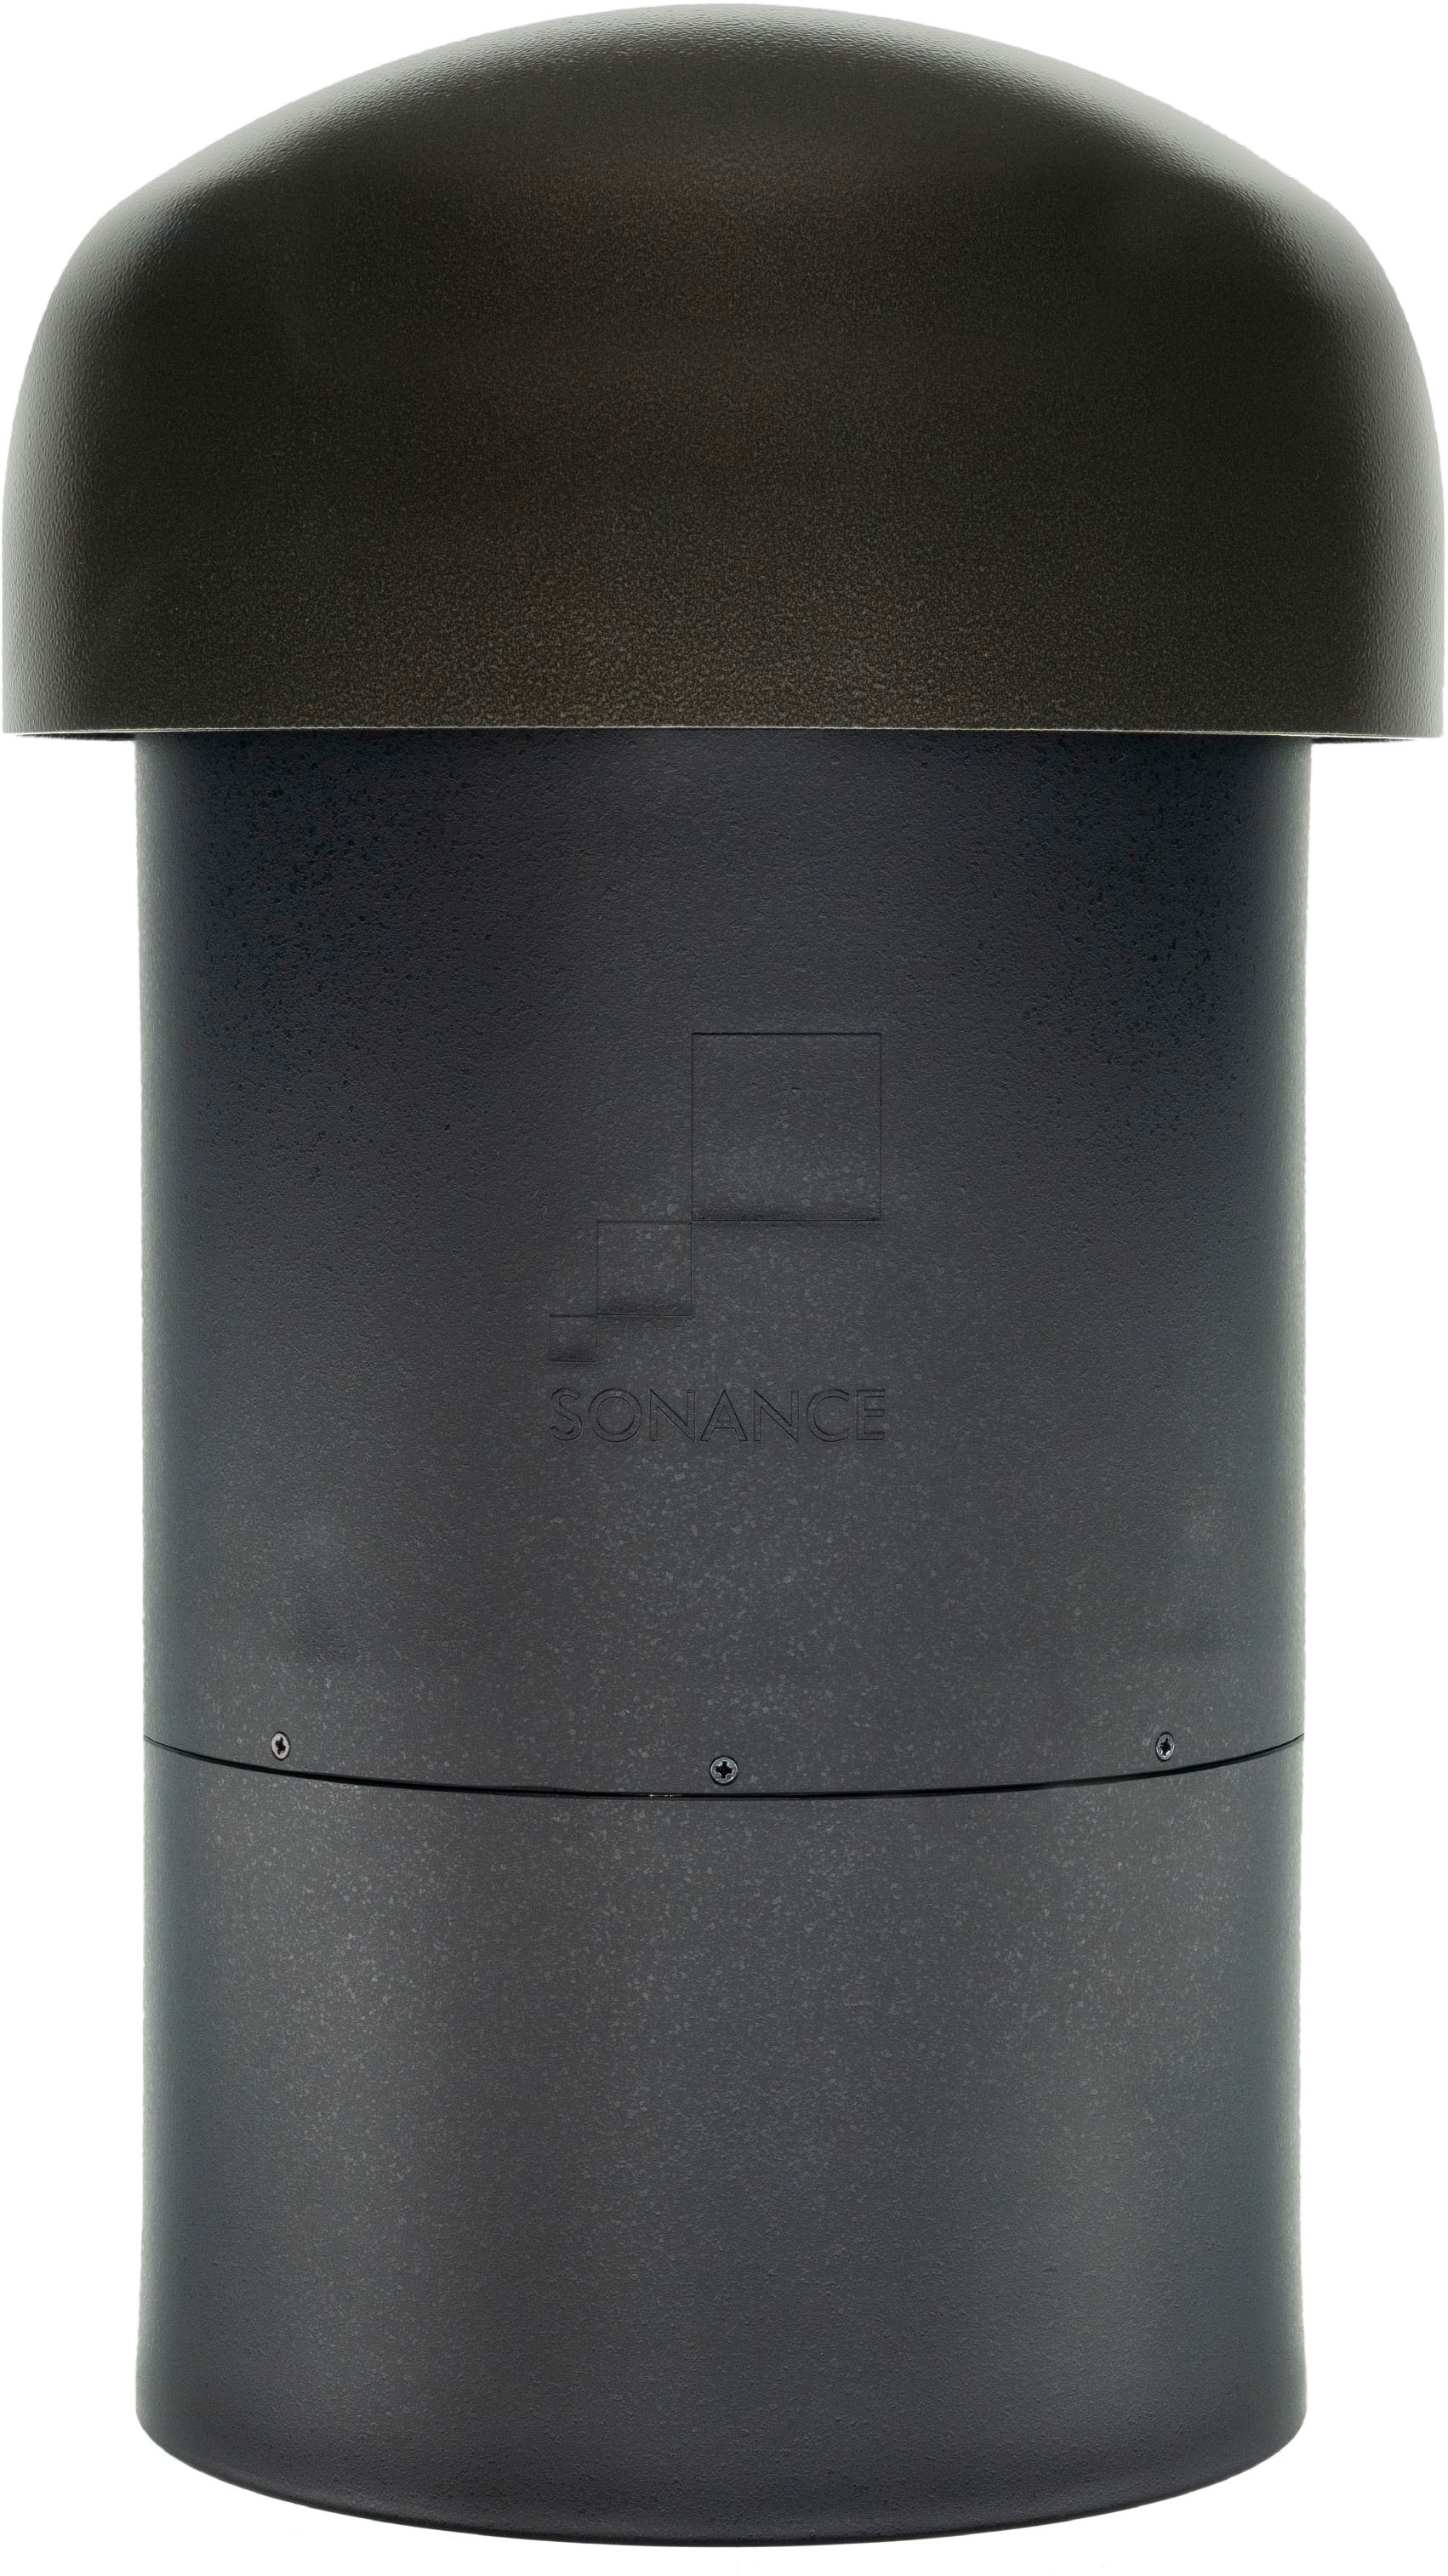 Angle View: Sonance - SGS 8.1 SYSTEM W/SR 2-125 AMP - Garden Series 8.1-Ch. Outdoor Speaker System with 2-Ch. Amplifier (Each) - Dark Brown/Black